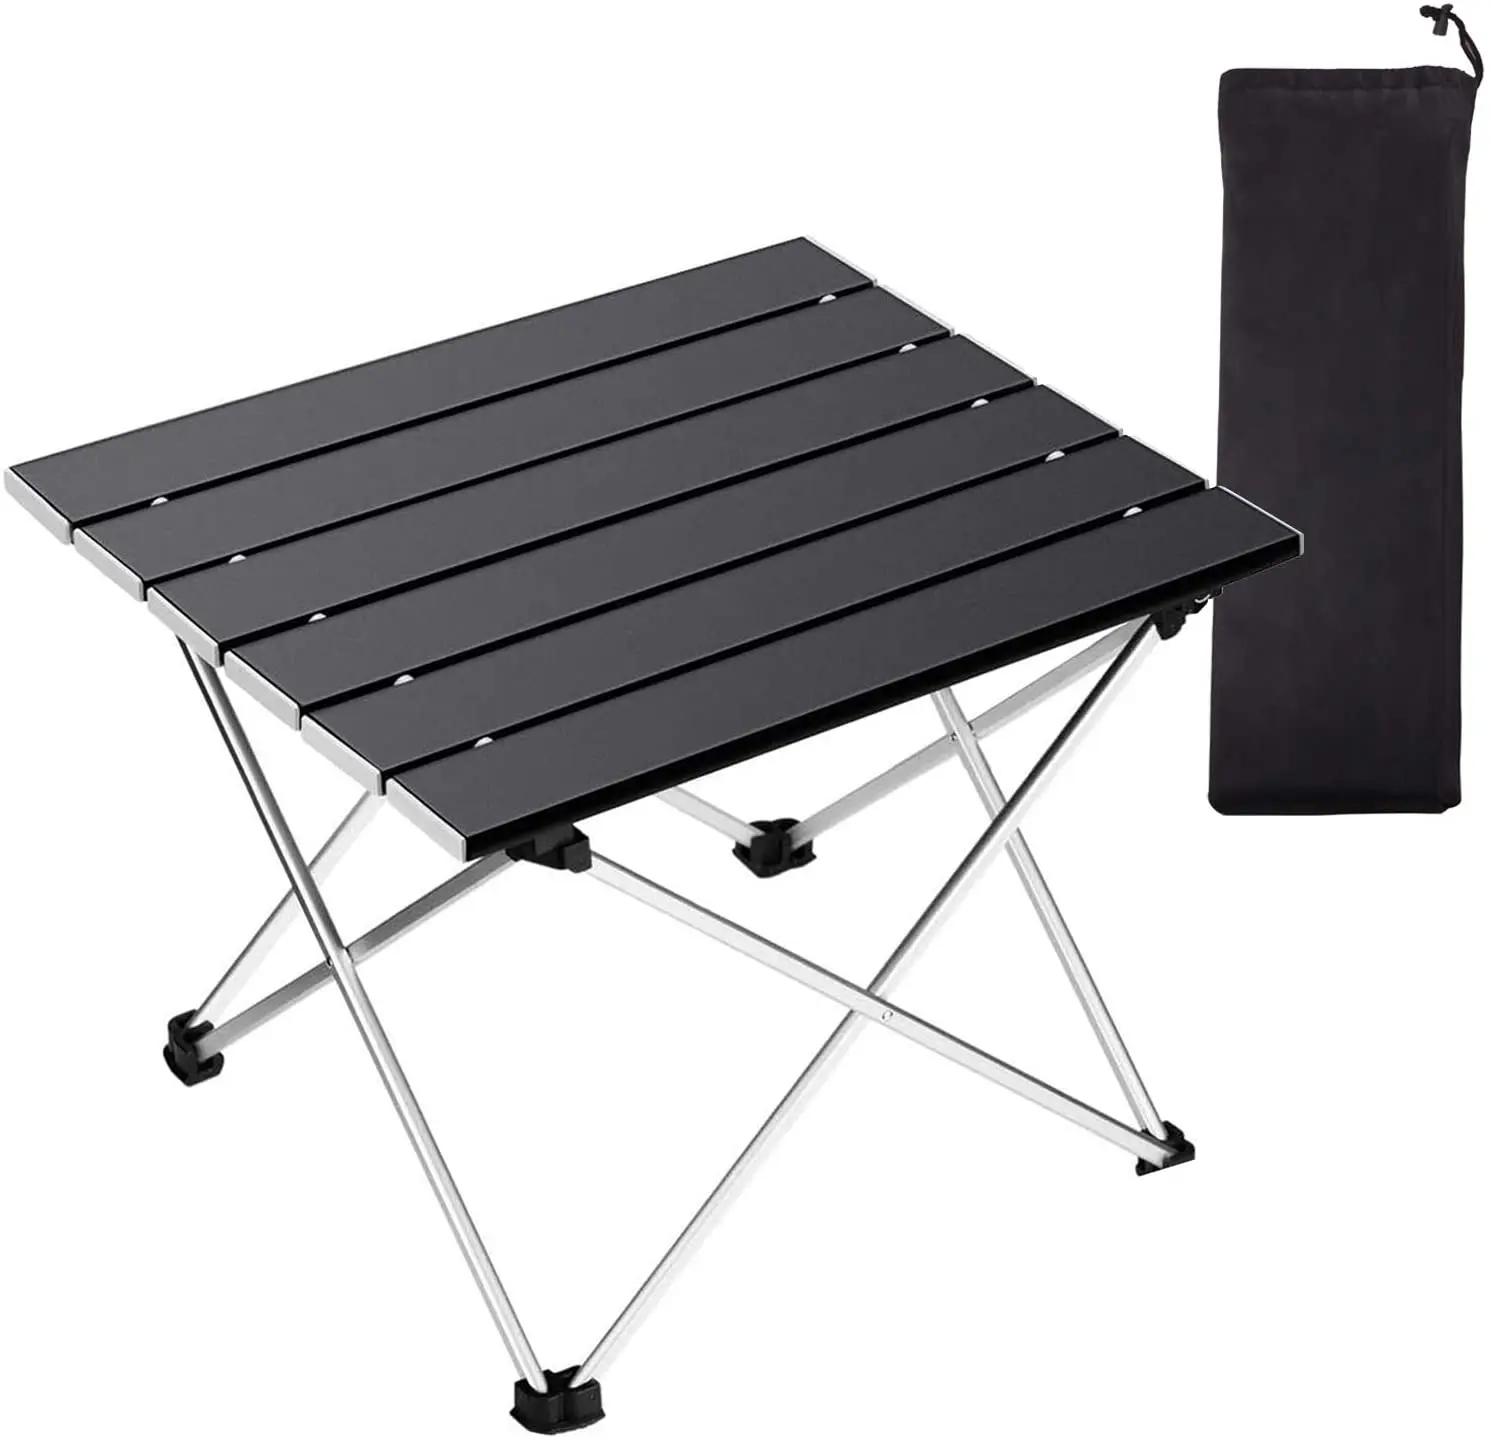 Outdoor Aluminum Folding Table Ultralight Portable Picnic Camping Table USA 